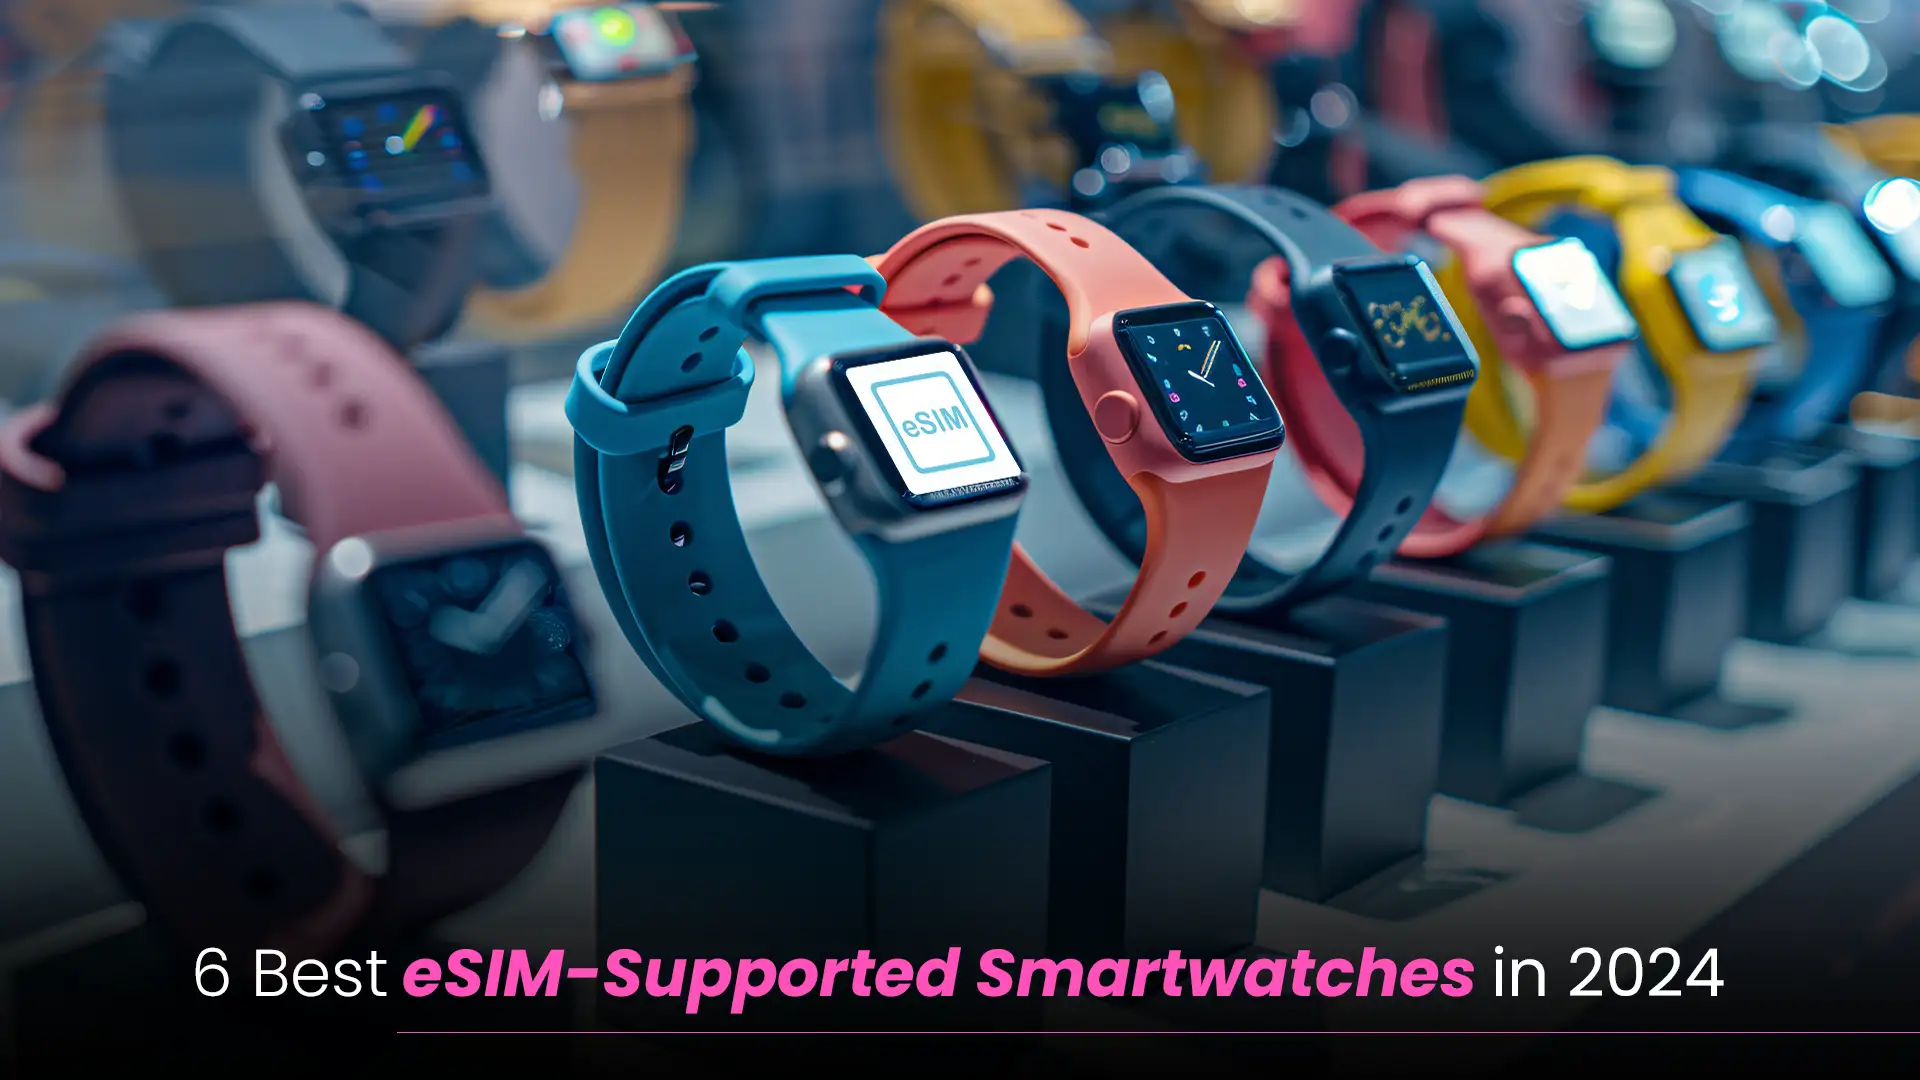 Popular: 6 Best eSIM-supported Smartwatches in 2024